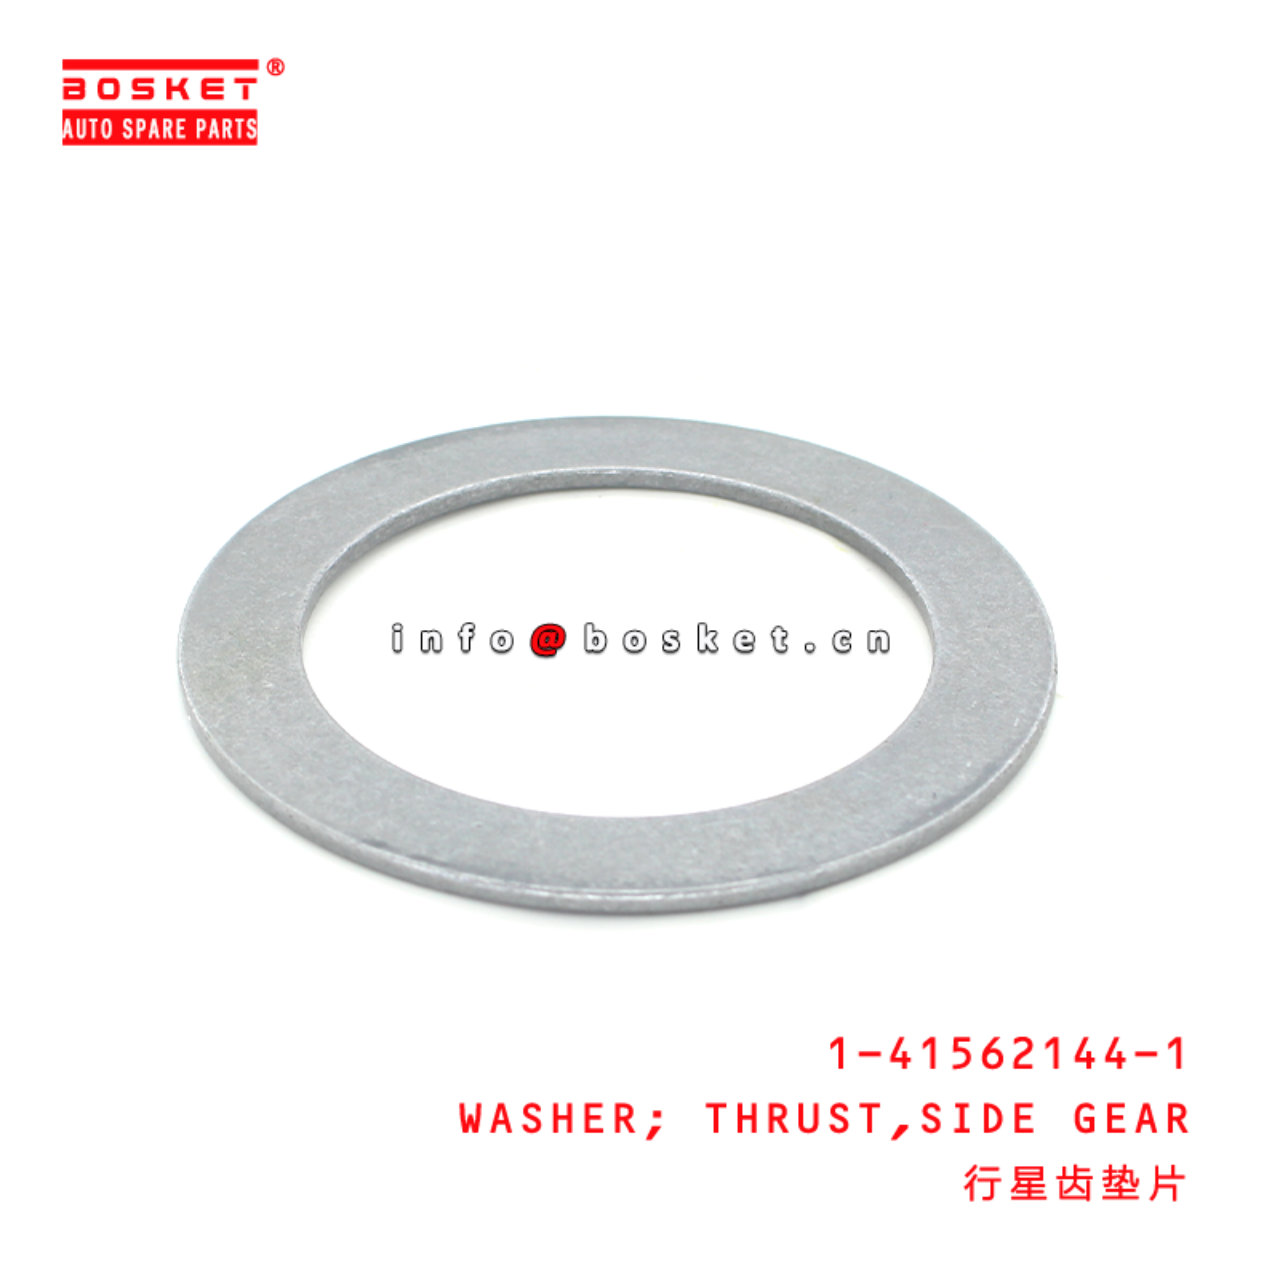  1-41562144-1 Side Gear Thrust Washer 1415621441 Suitable for ISUZU XD